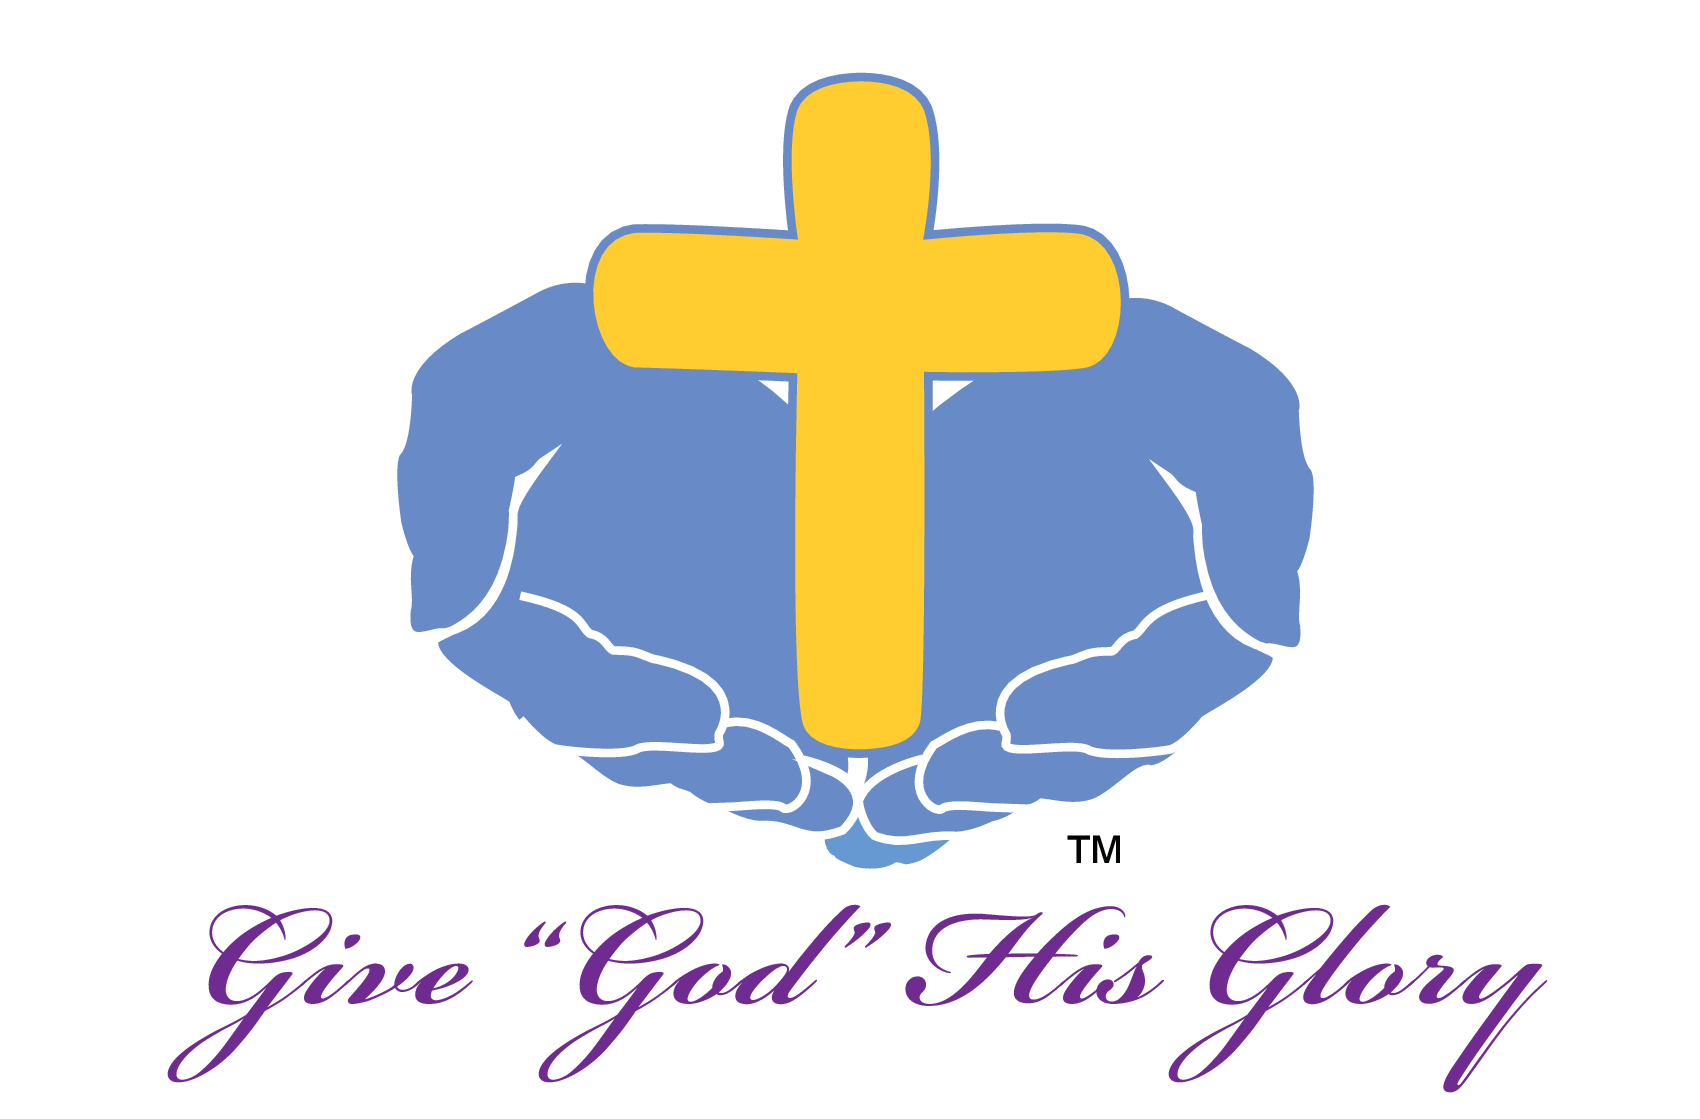 GiveGodHisGloryLLC Logo